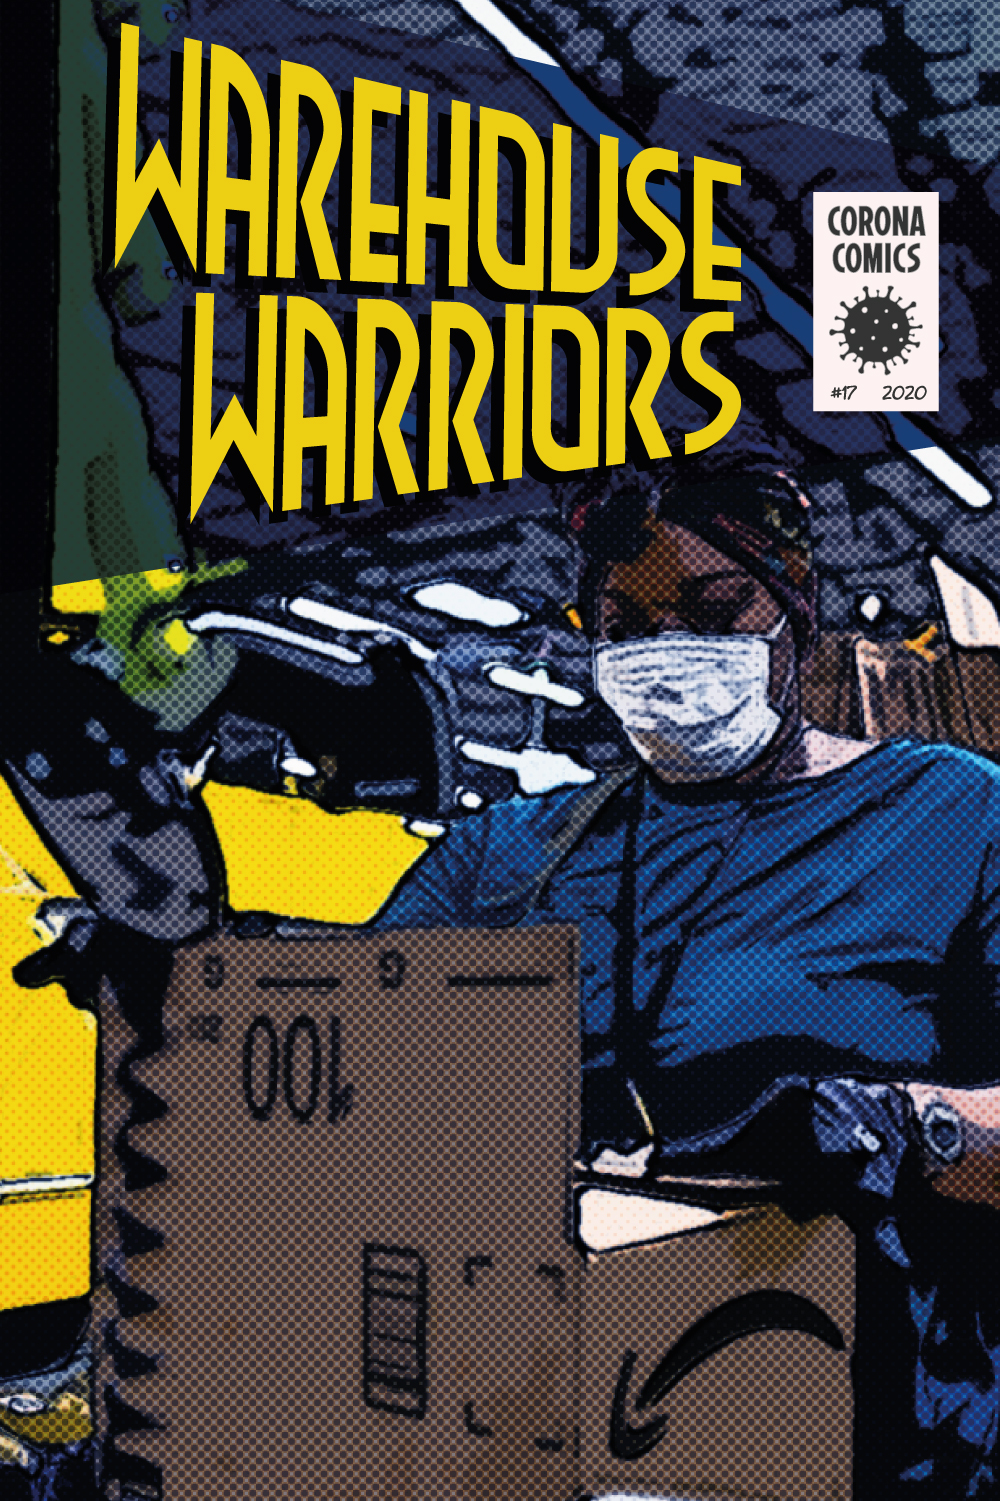 Warehouse-Warriors-1-1000x